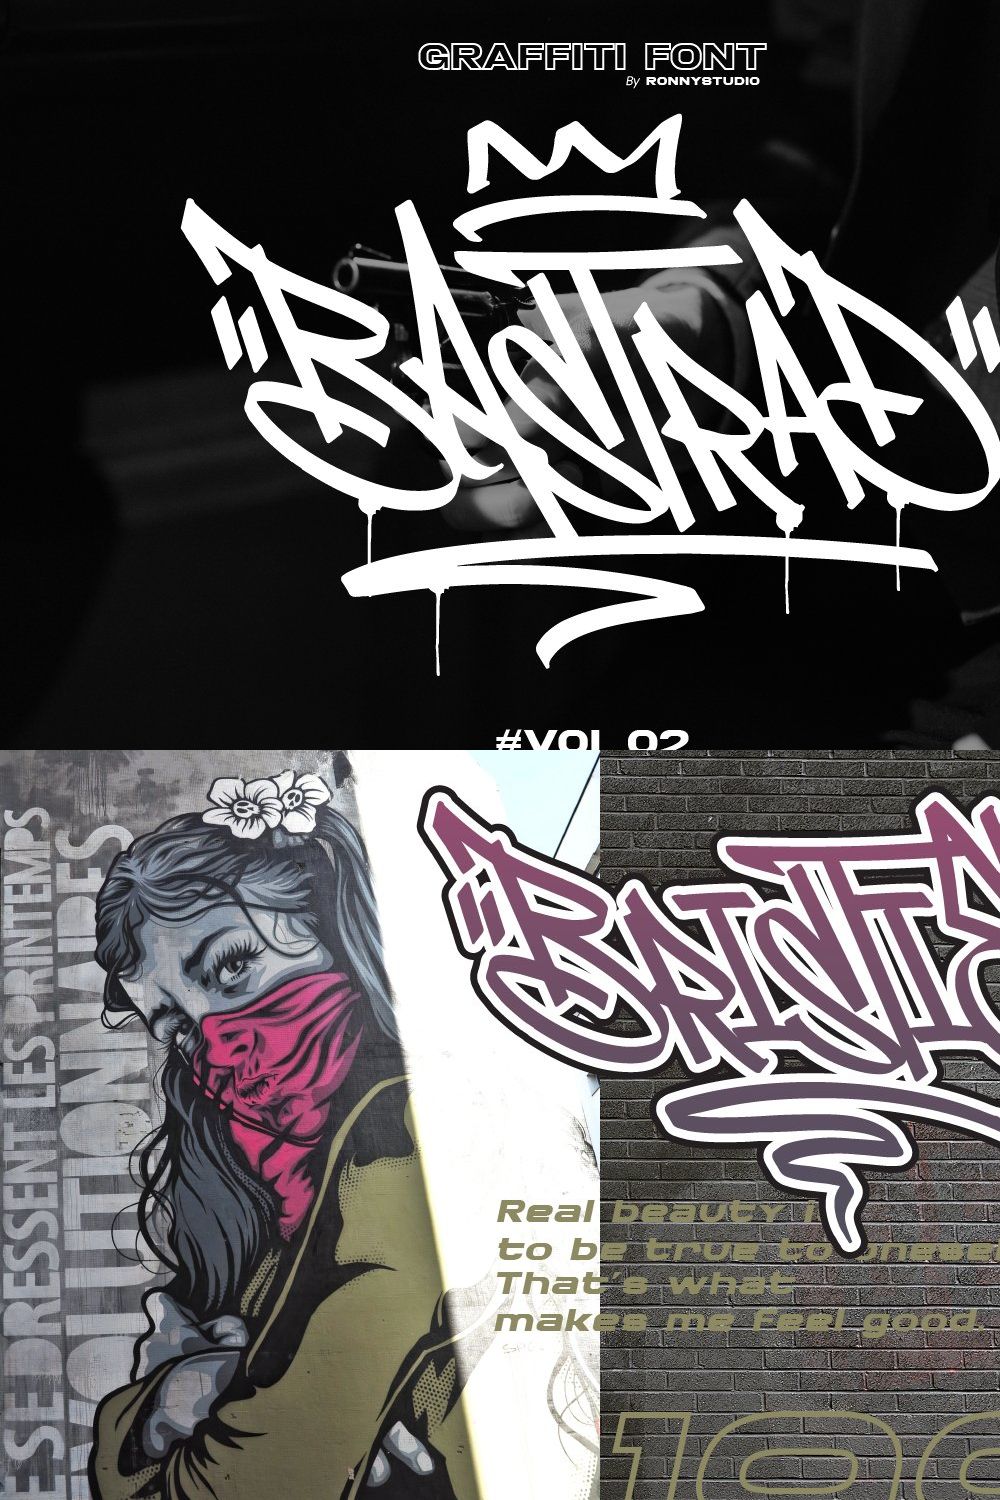 Bastrad Vol.02 - Graffiti Font pinterest preview image.